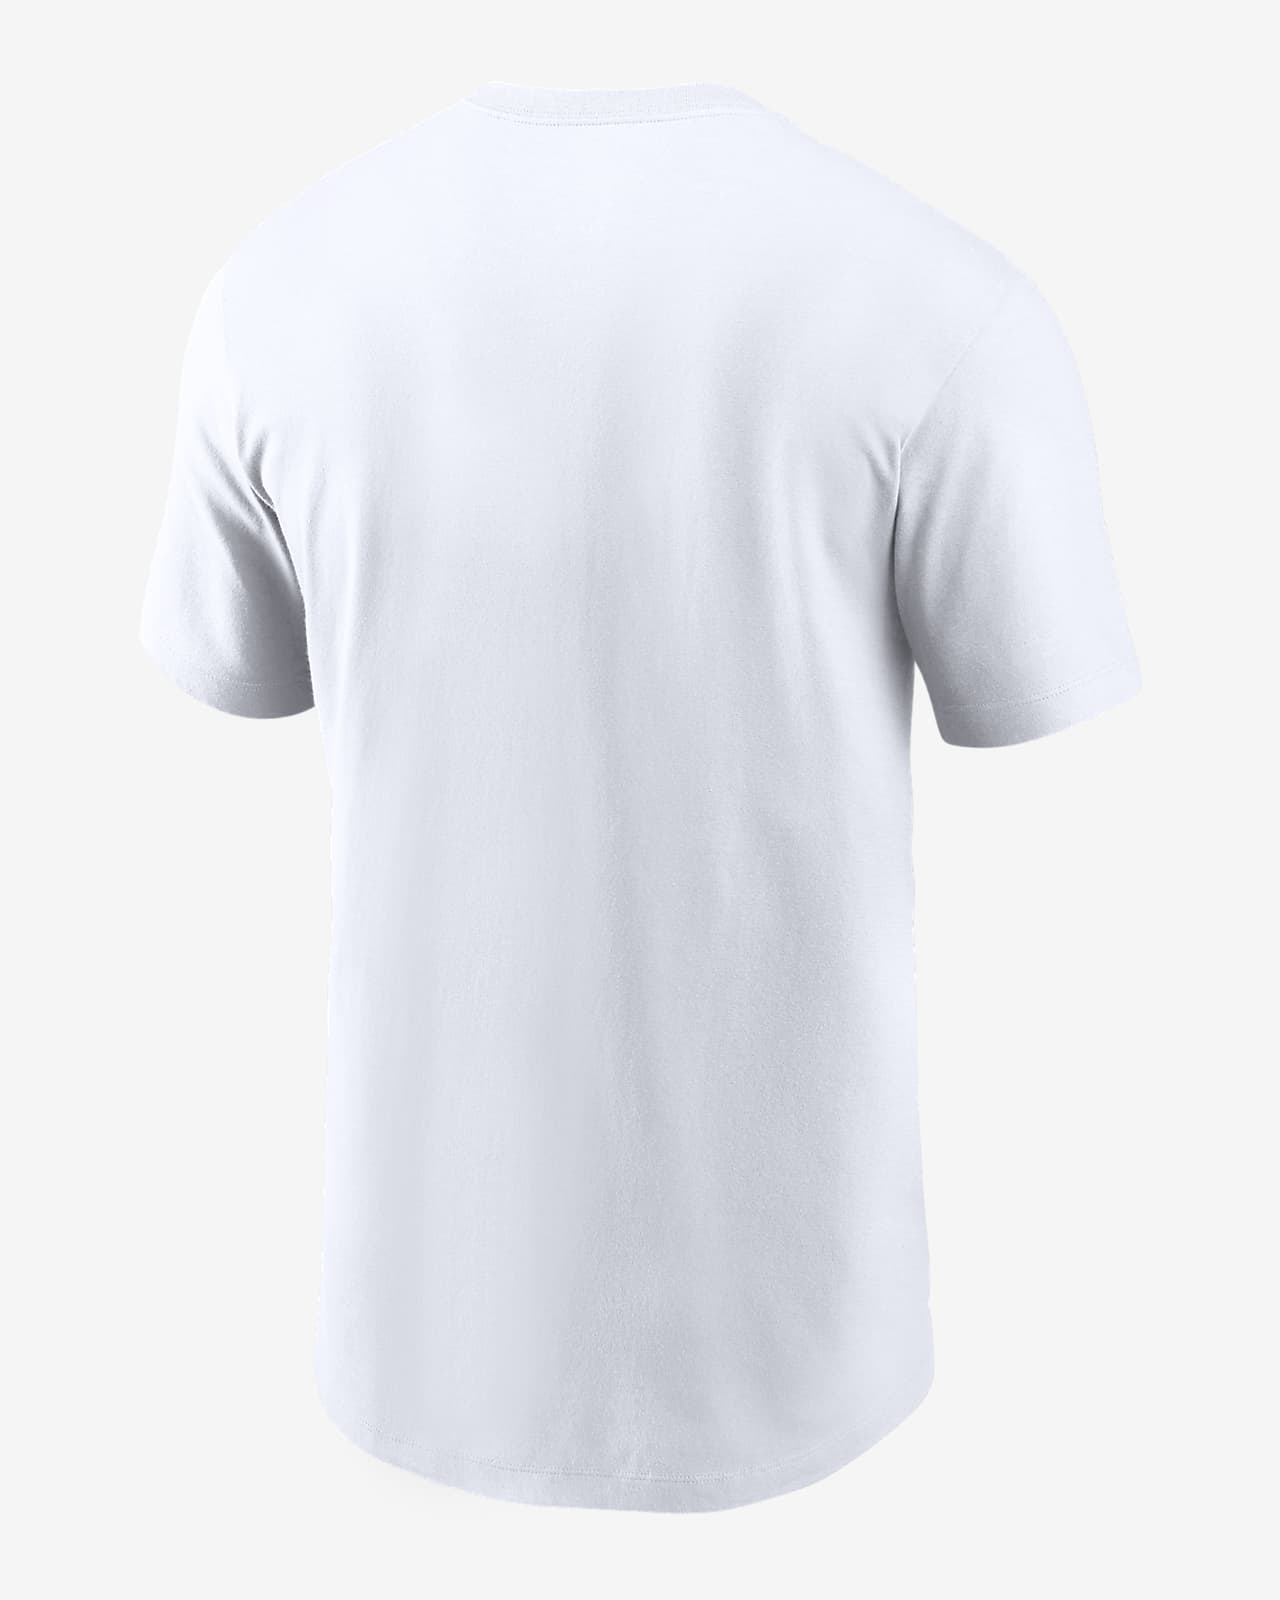 San Diego Padres Nike Logo Velocity Performance Shirt, hoodie